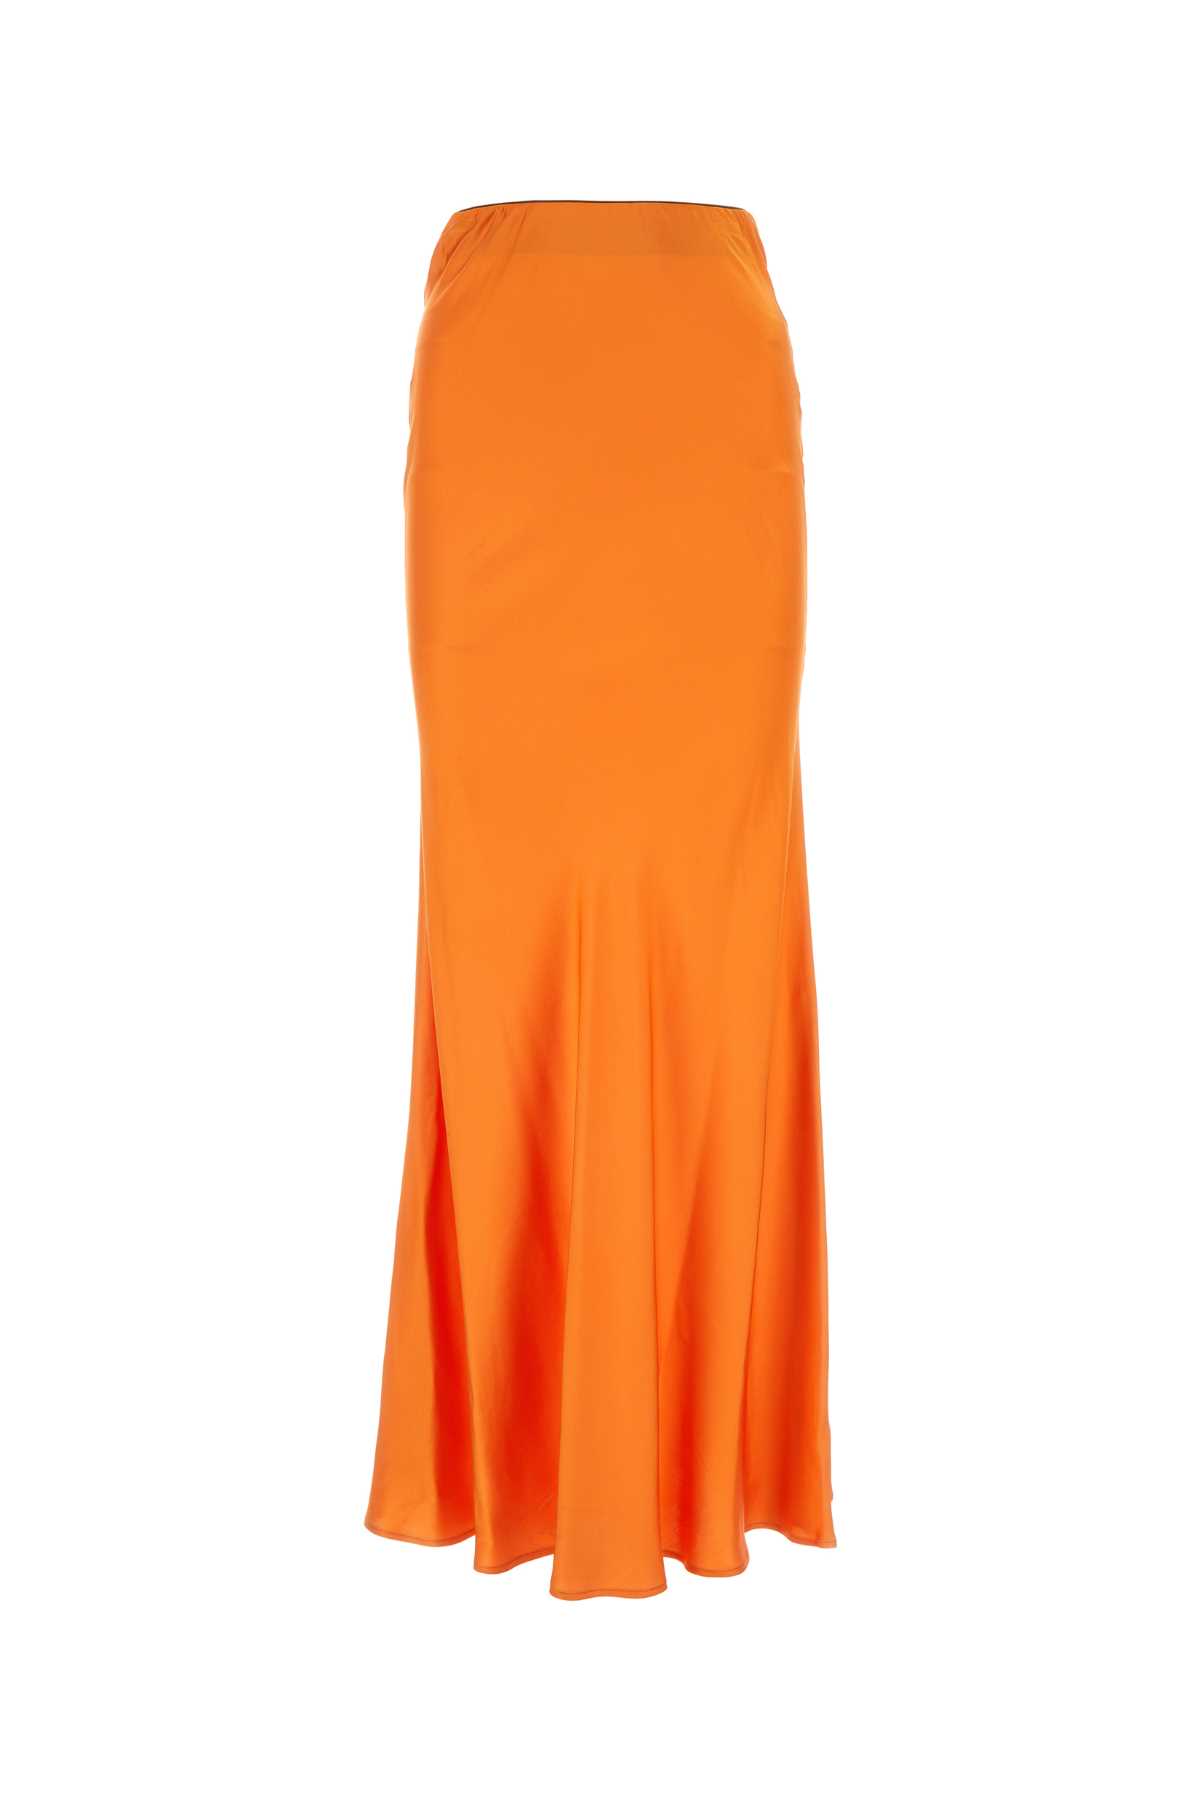 Orange Satin Kate Skirt